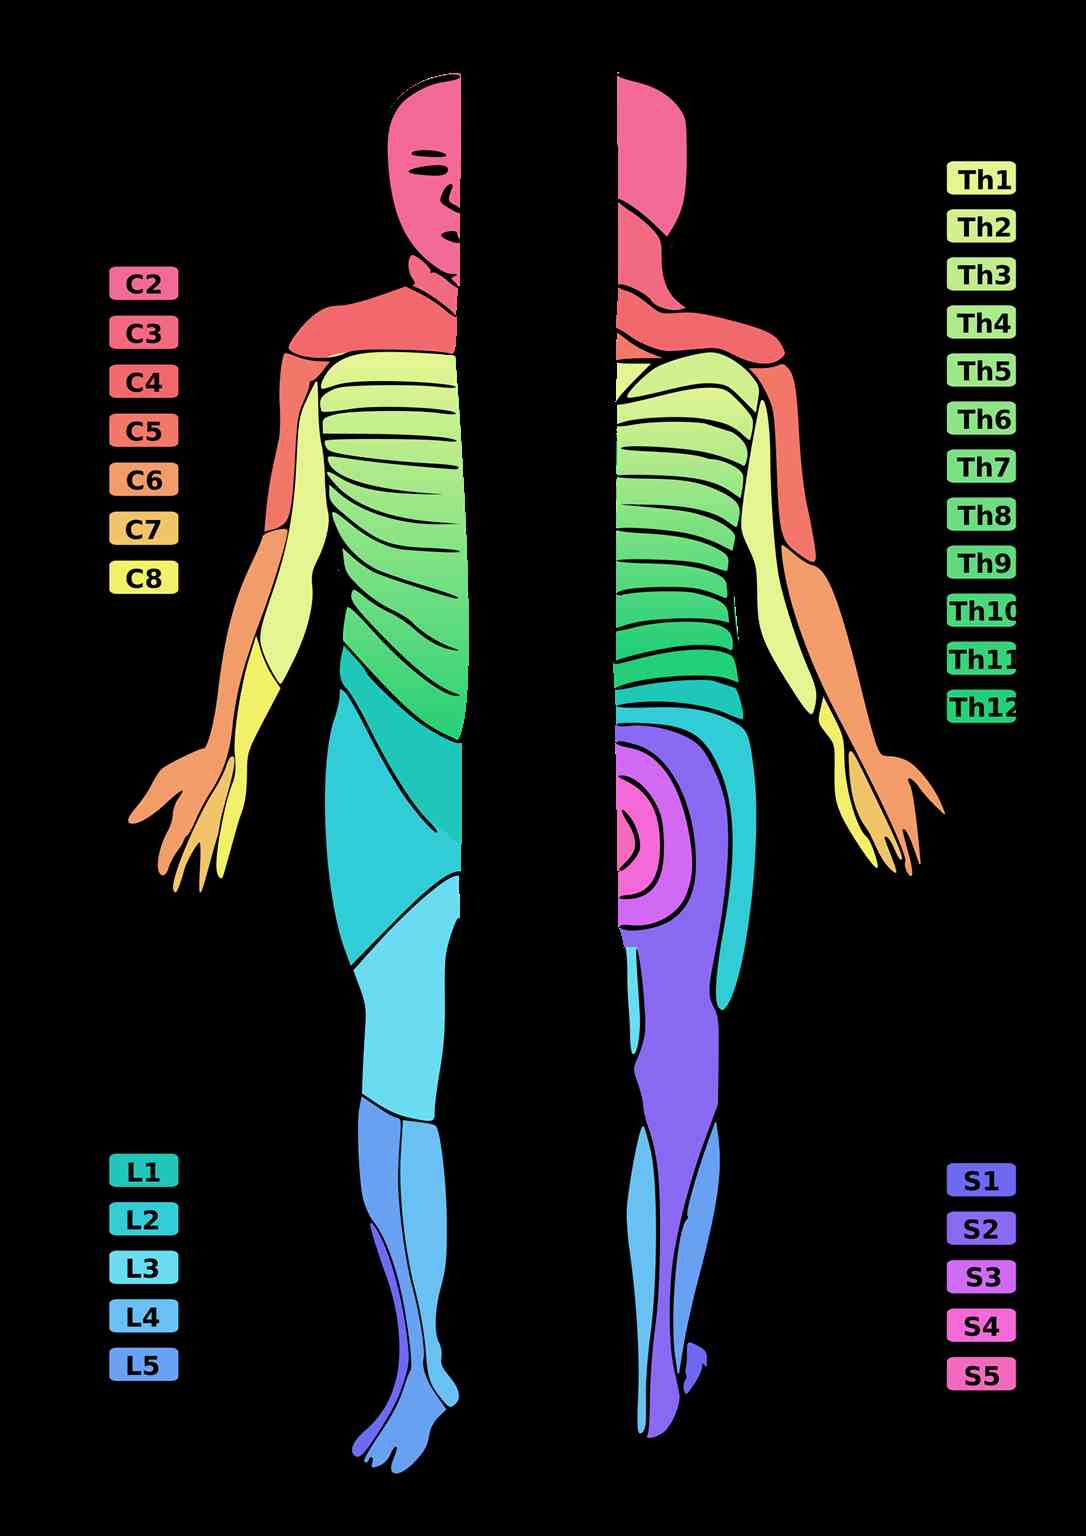 A diagram showing human dermatomes, i